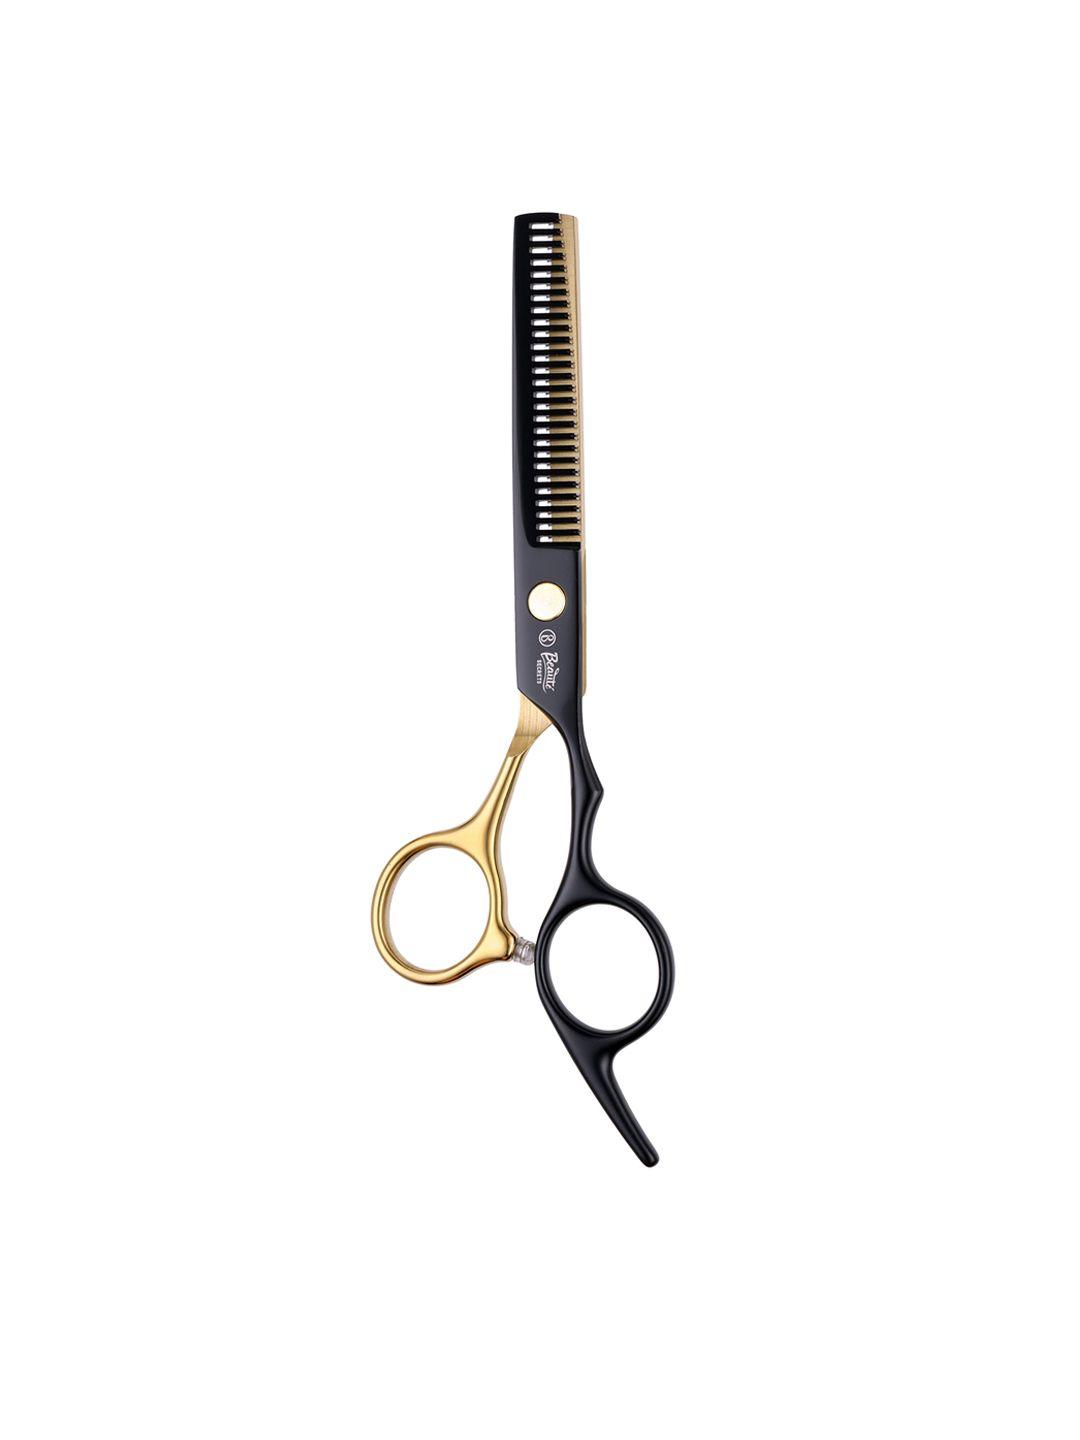 beaute secrets hair thinning salon scissors - gold & black